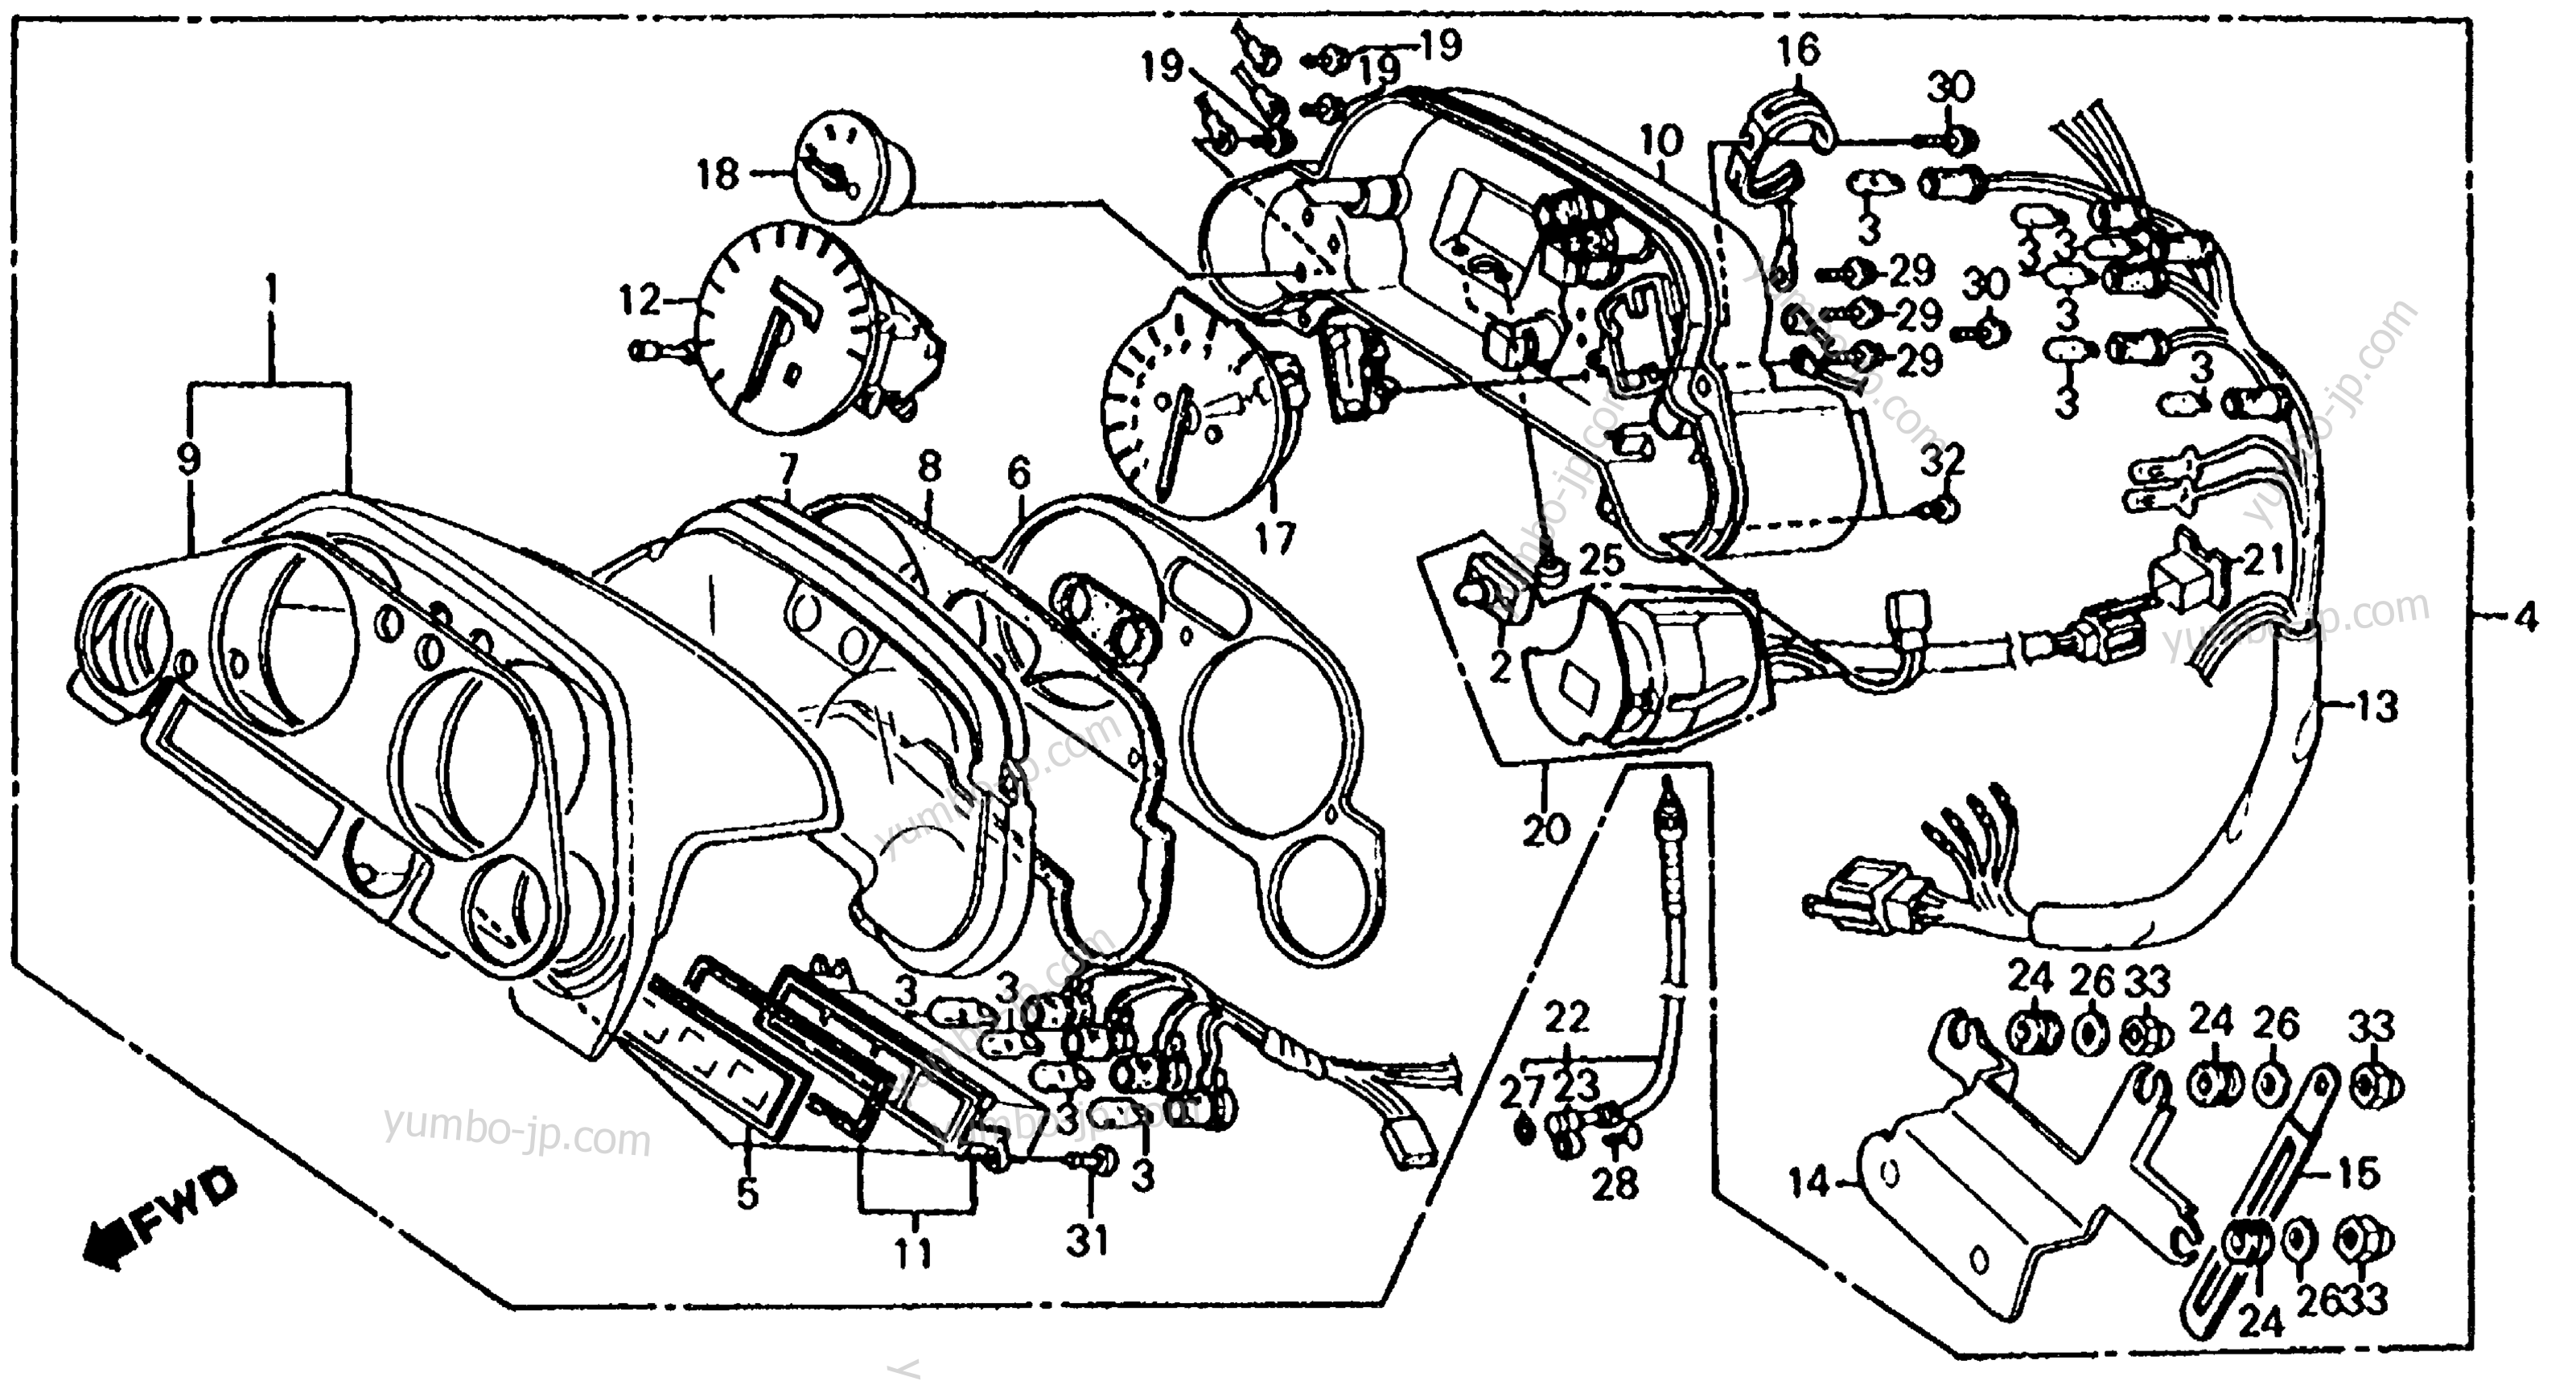 INSTRUMENTS for motorcycles HONDA CB700SC AC 1984 year